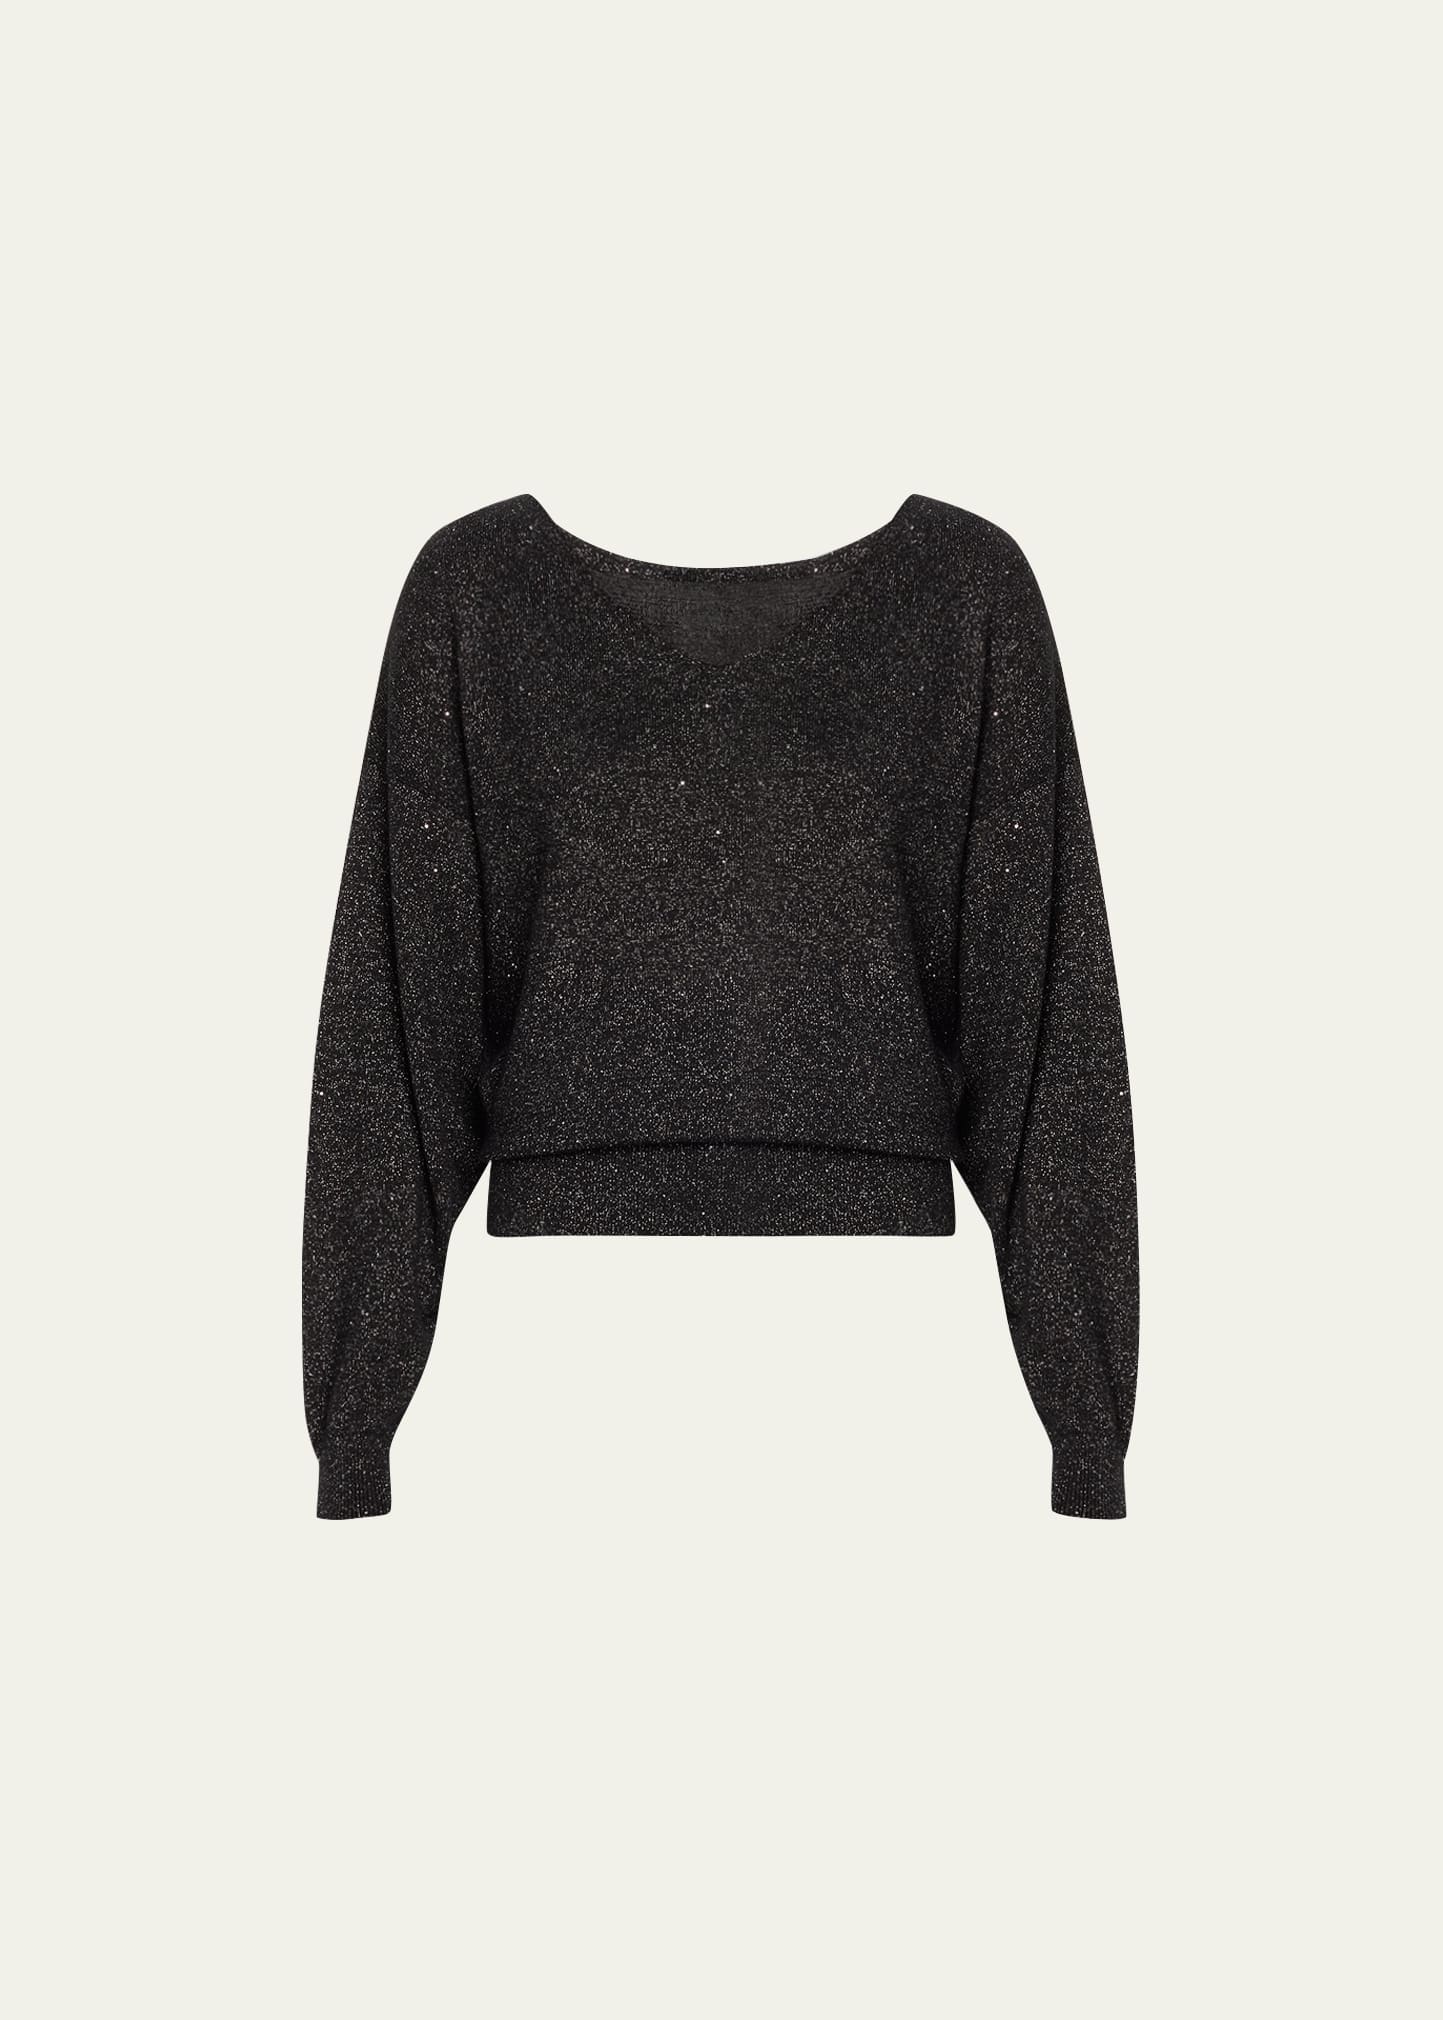 Heathered V-Neck Sequin Sweater